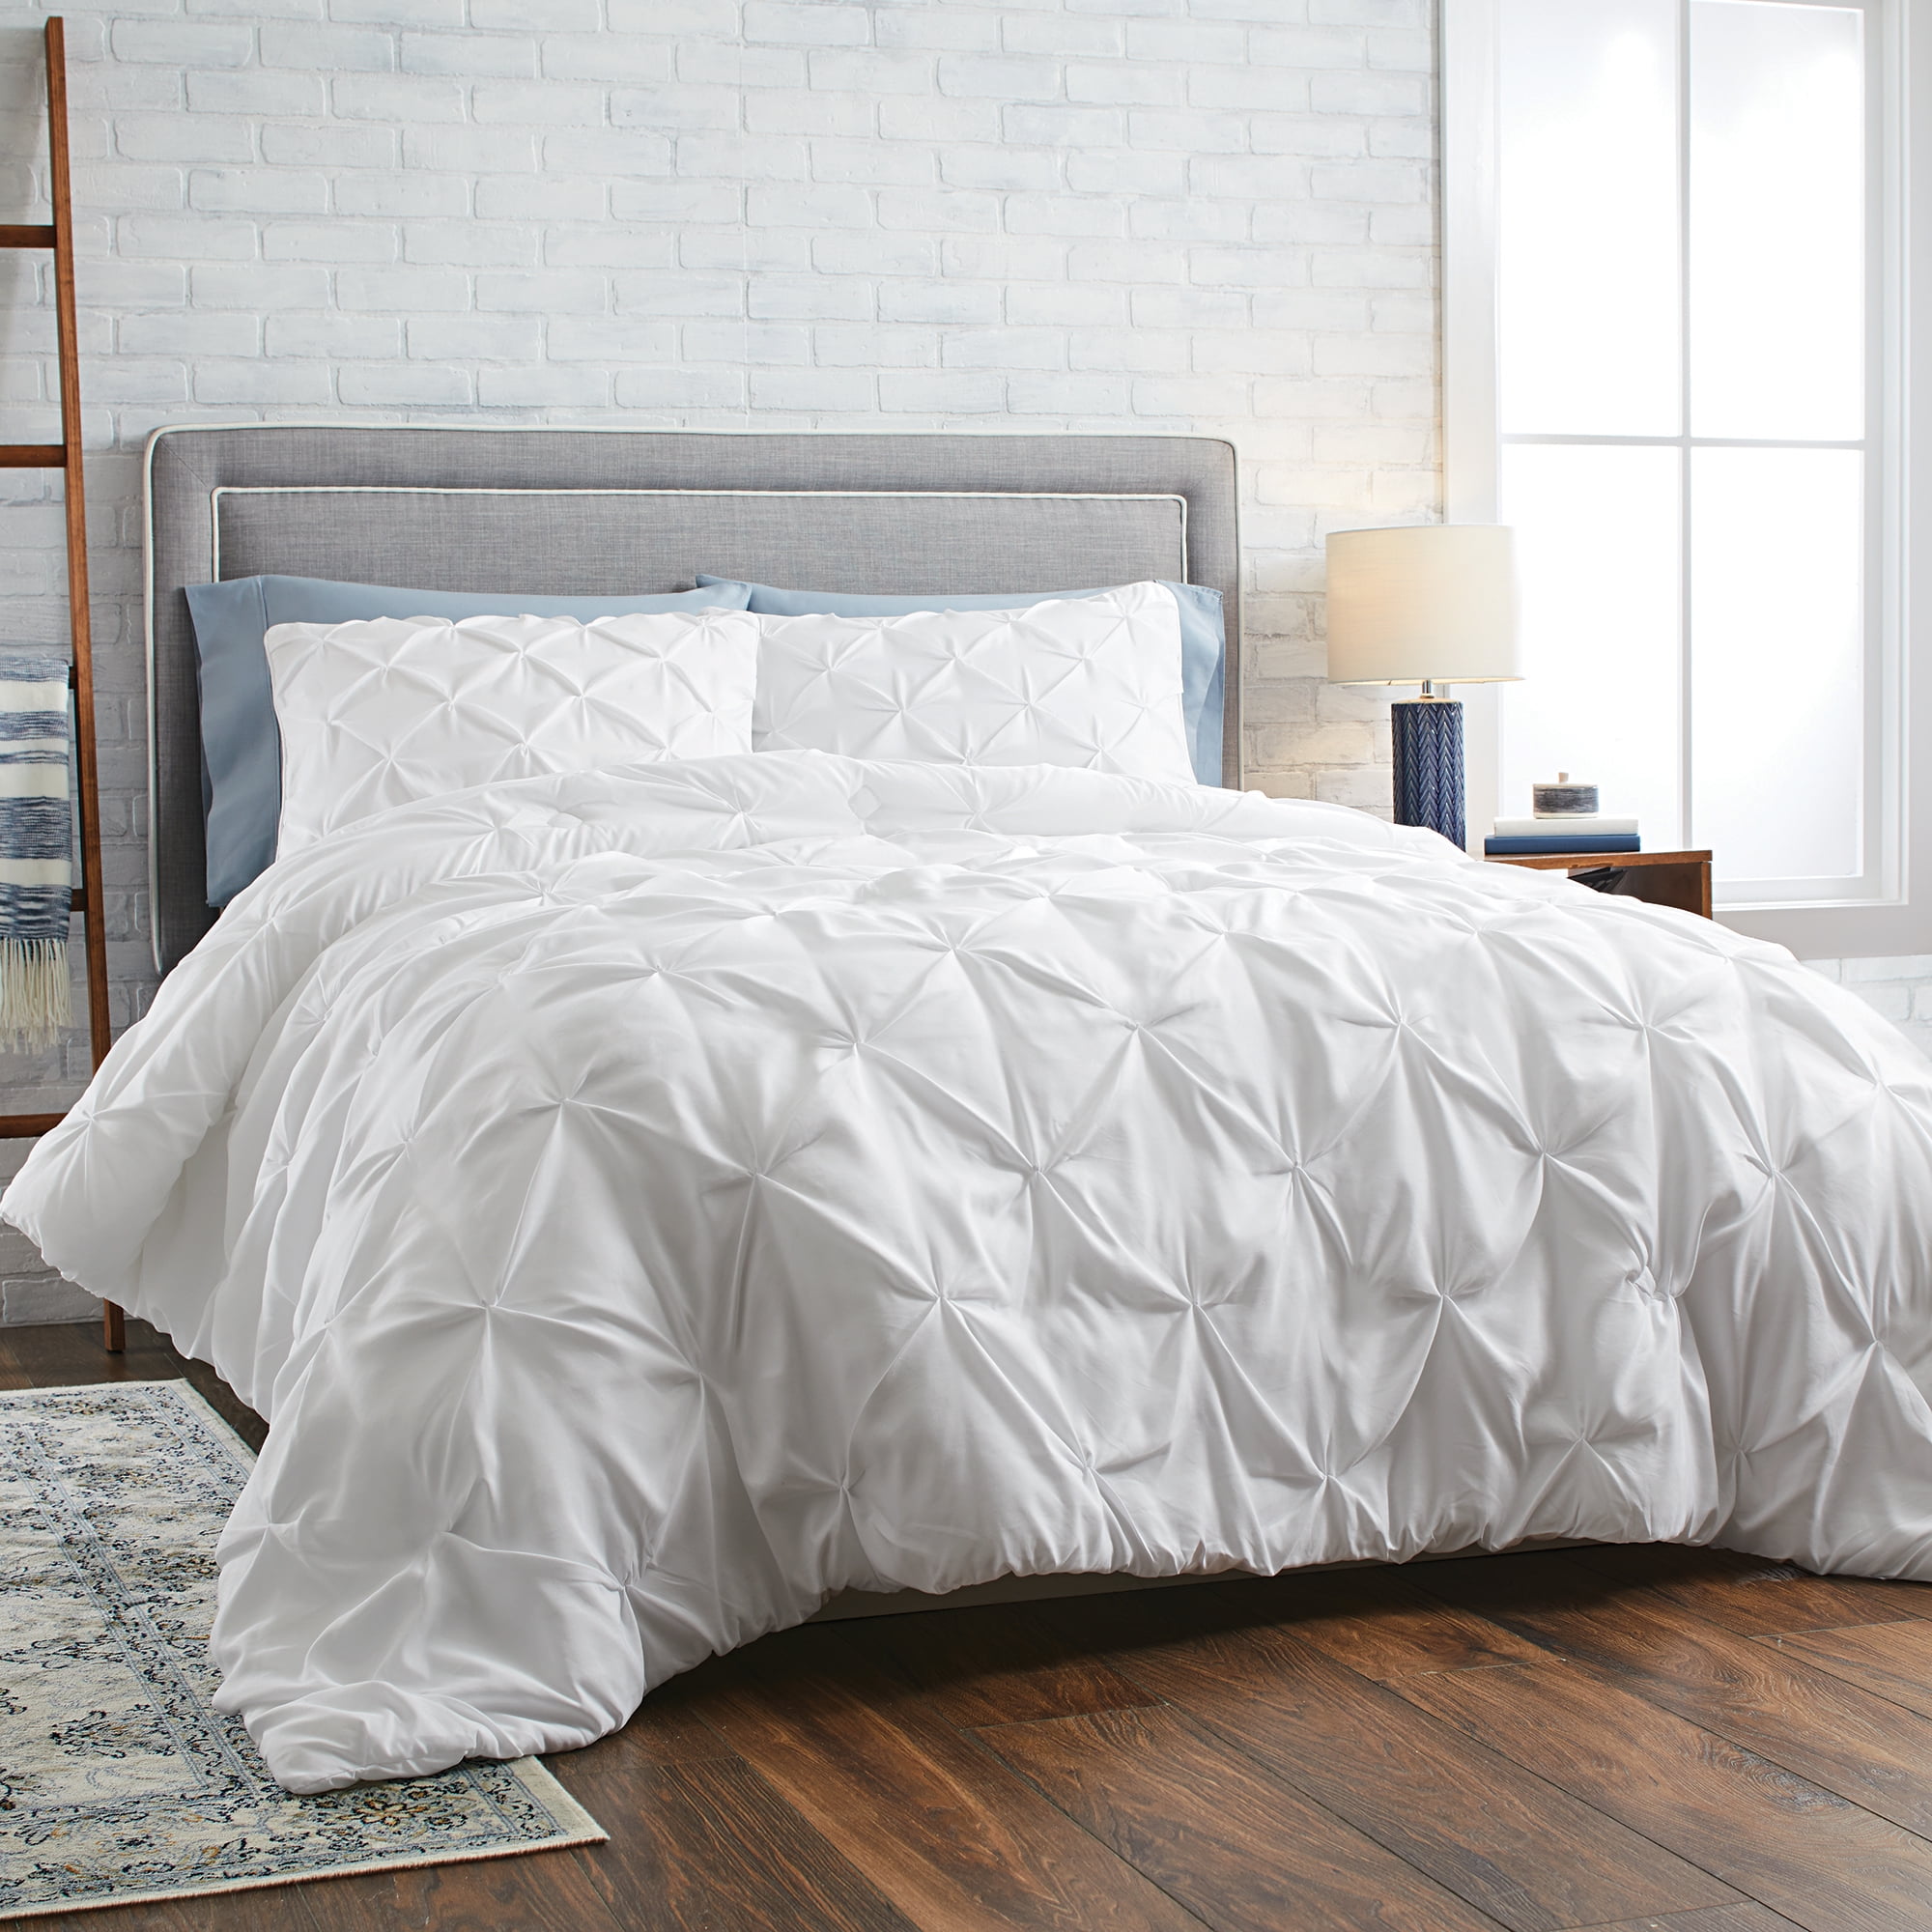 Better Homes & Gardens White Pintuck 3Piece Comforter Set, King